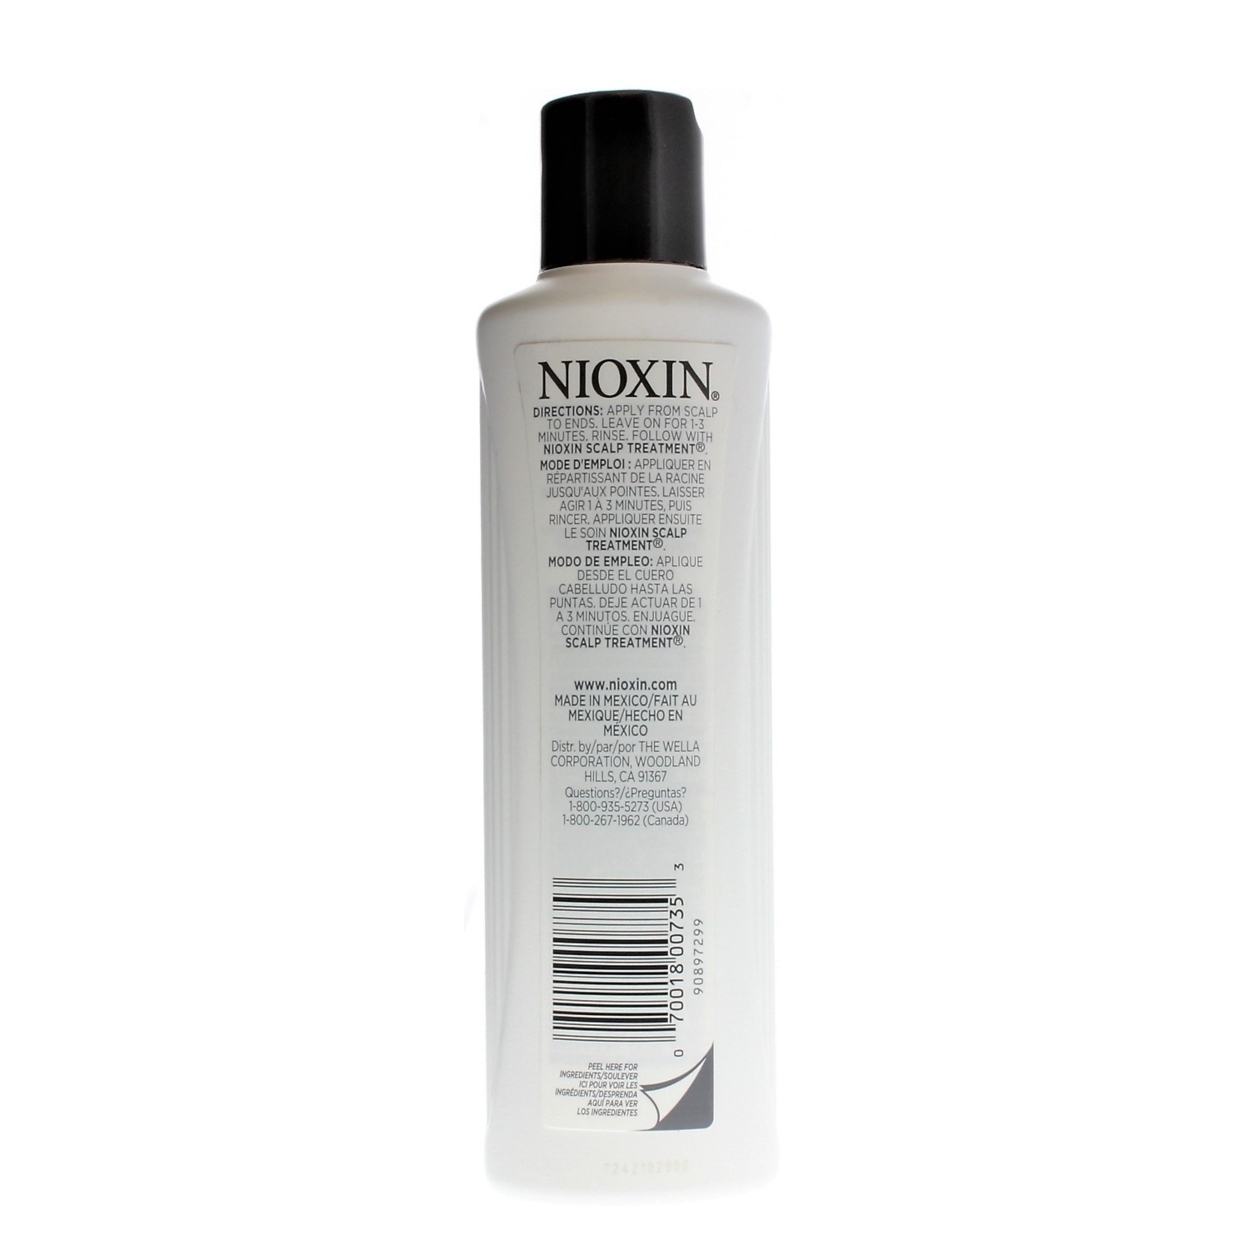 Nioxin System 3 Scalp Therapy Conditioner 5.07oz/150ml